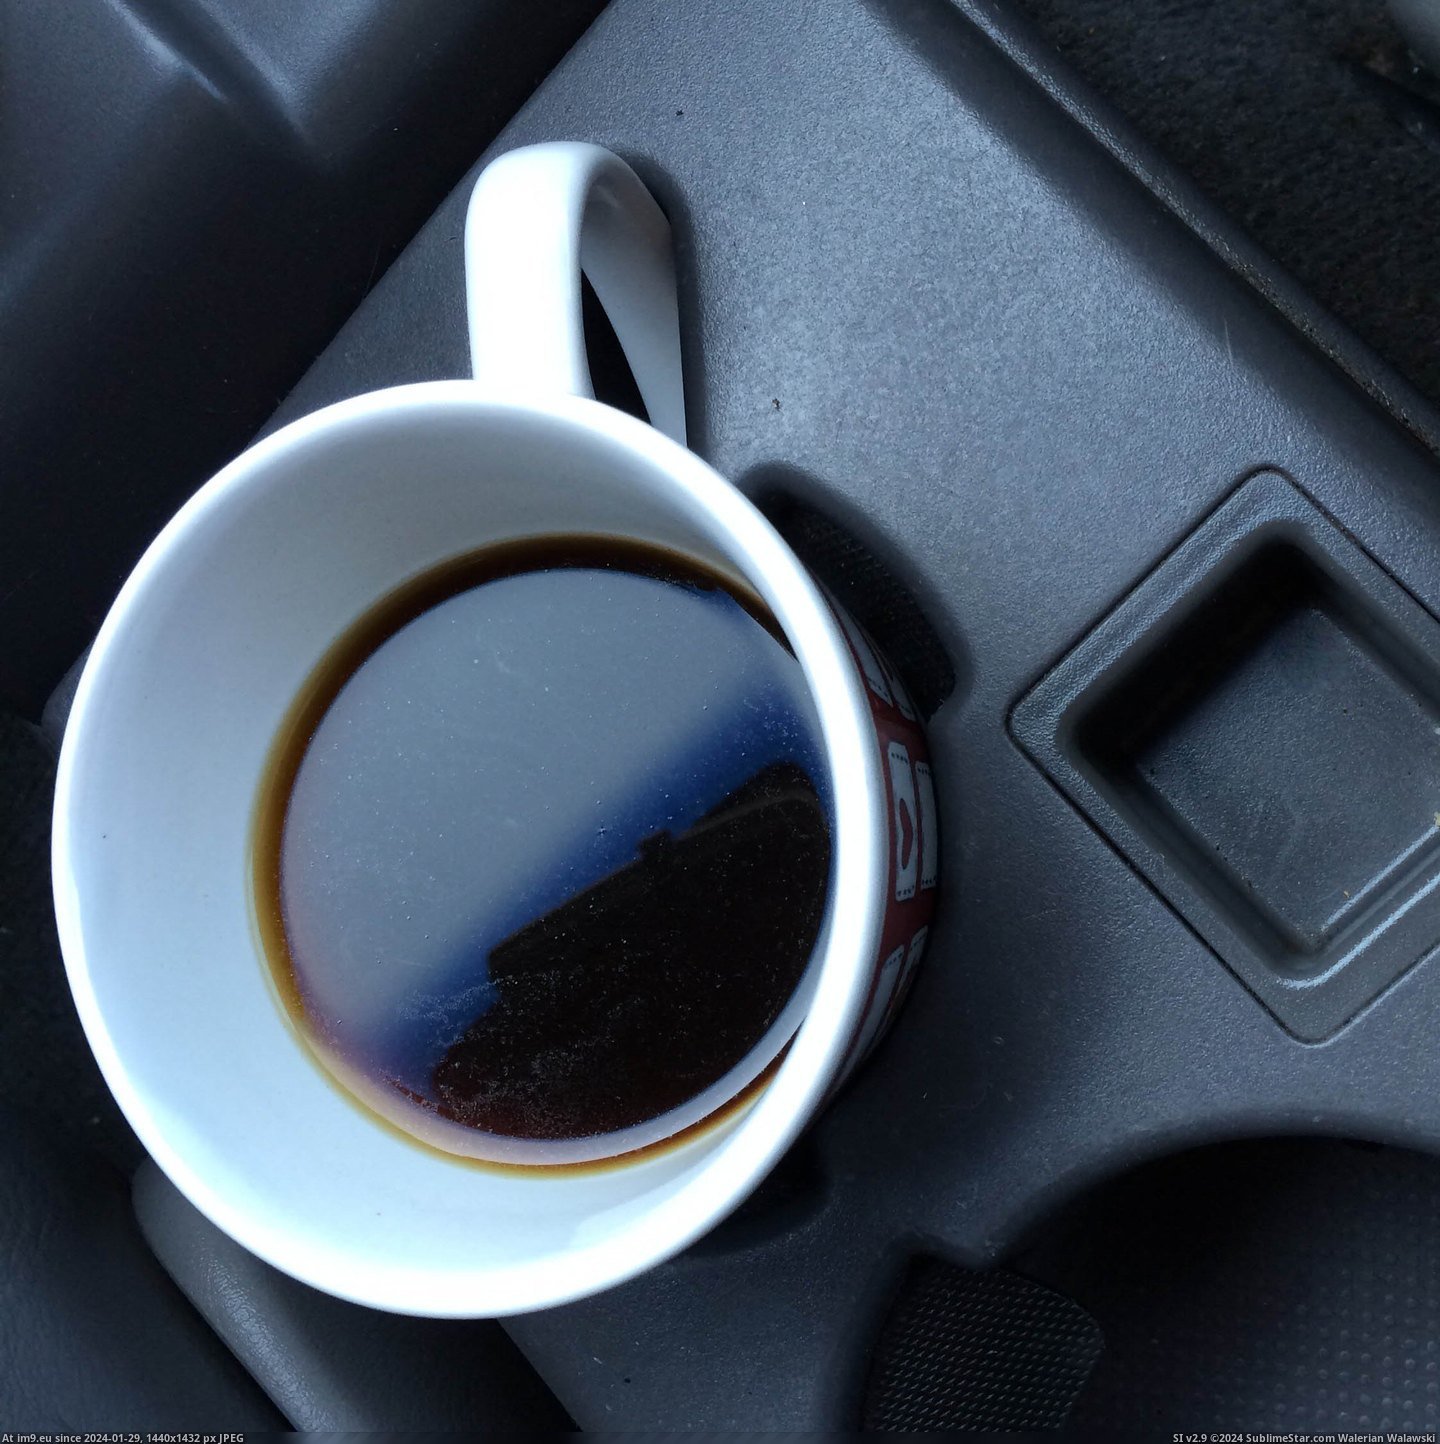 #Cup #Truck #Handles #Holders #Designed #Mug [Mildlyinteresting] The cup holders in my truck appear to be designed for mug handles. Pic. (Bild von album My r/MILDLYINTERESTING favs))